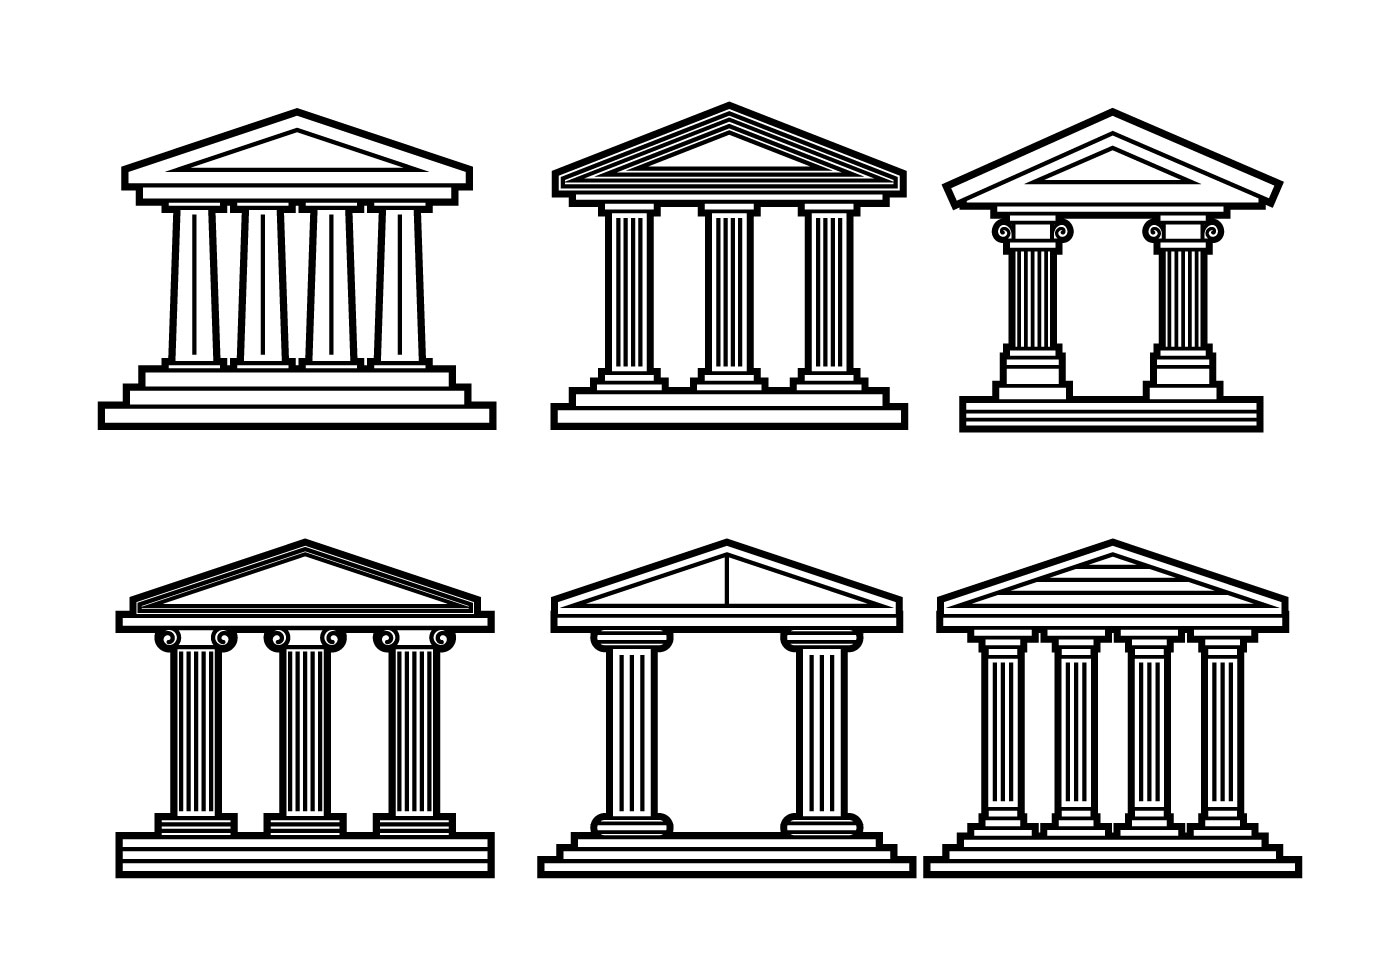 Roman Pillar Vector - Download Free Vector Art, Stock Graphics & Images